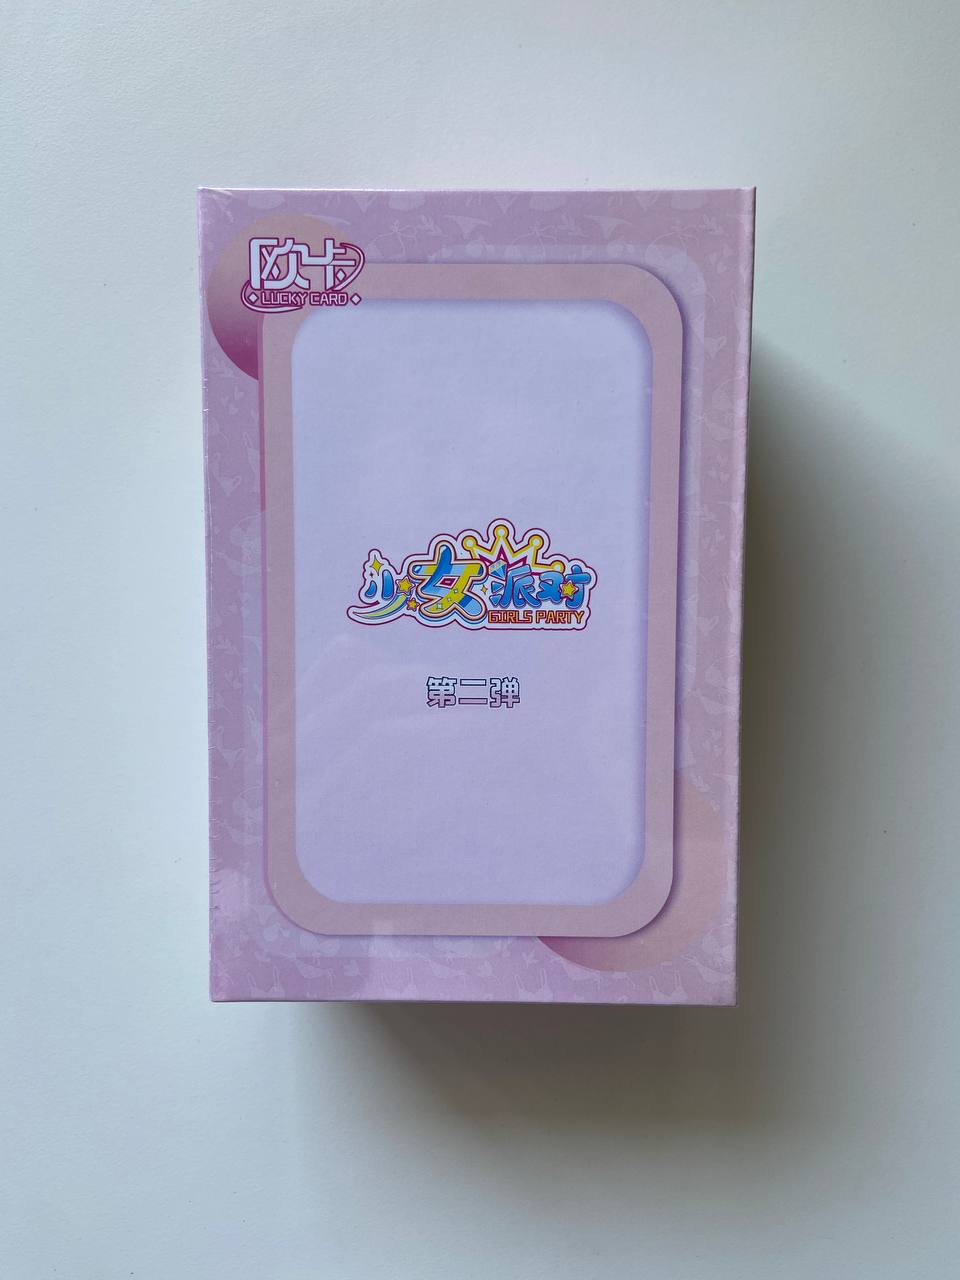 Goddess Story Girl Party 2 Display Card Box Sealed